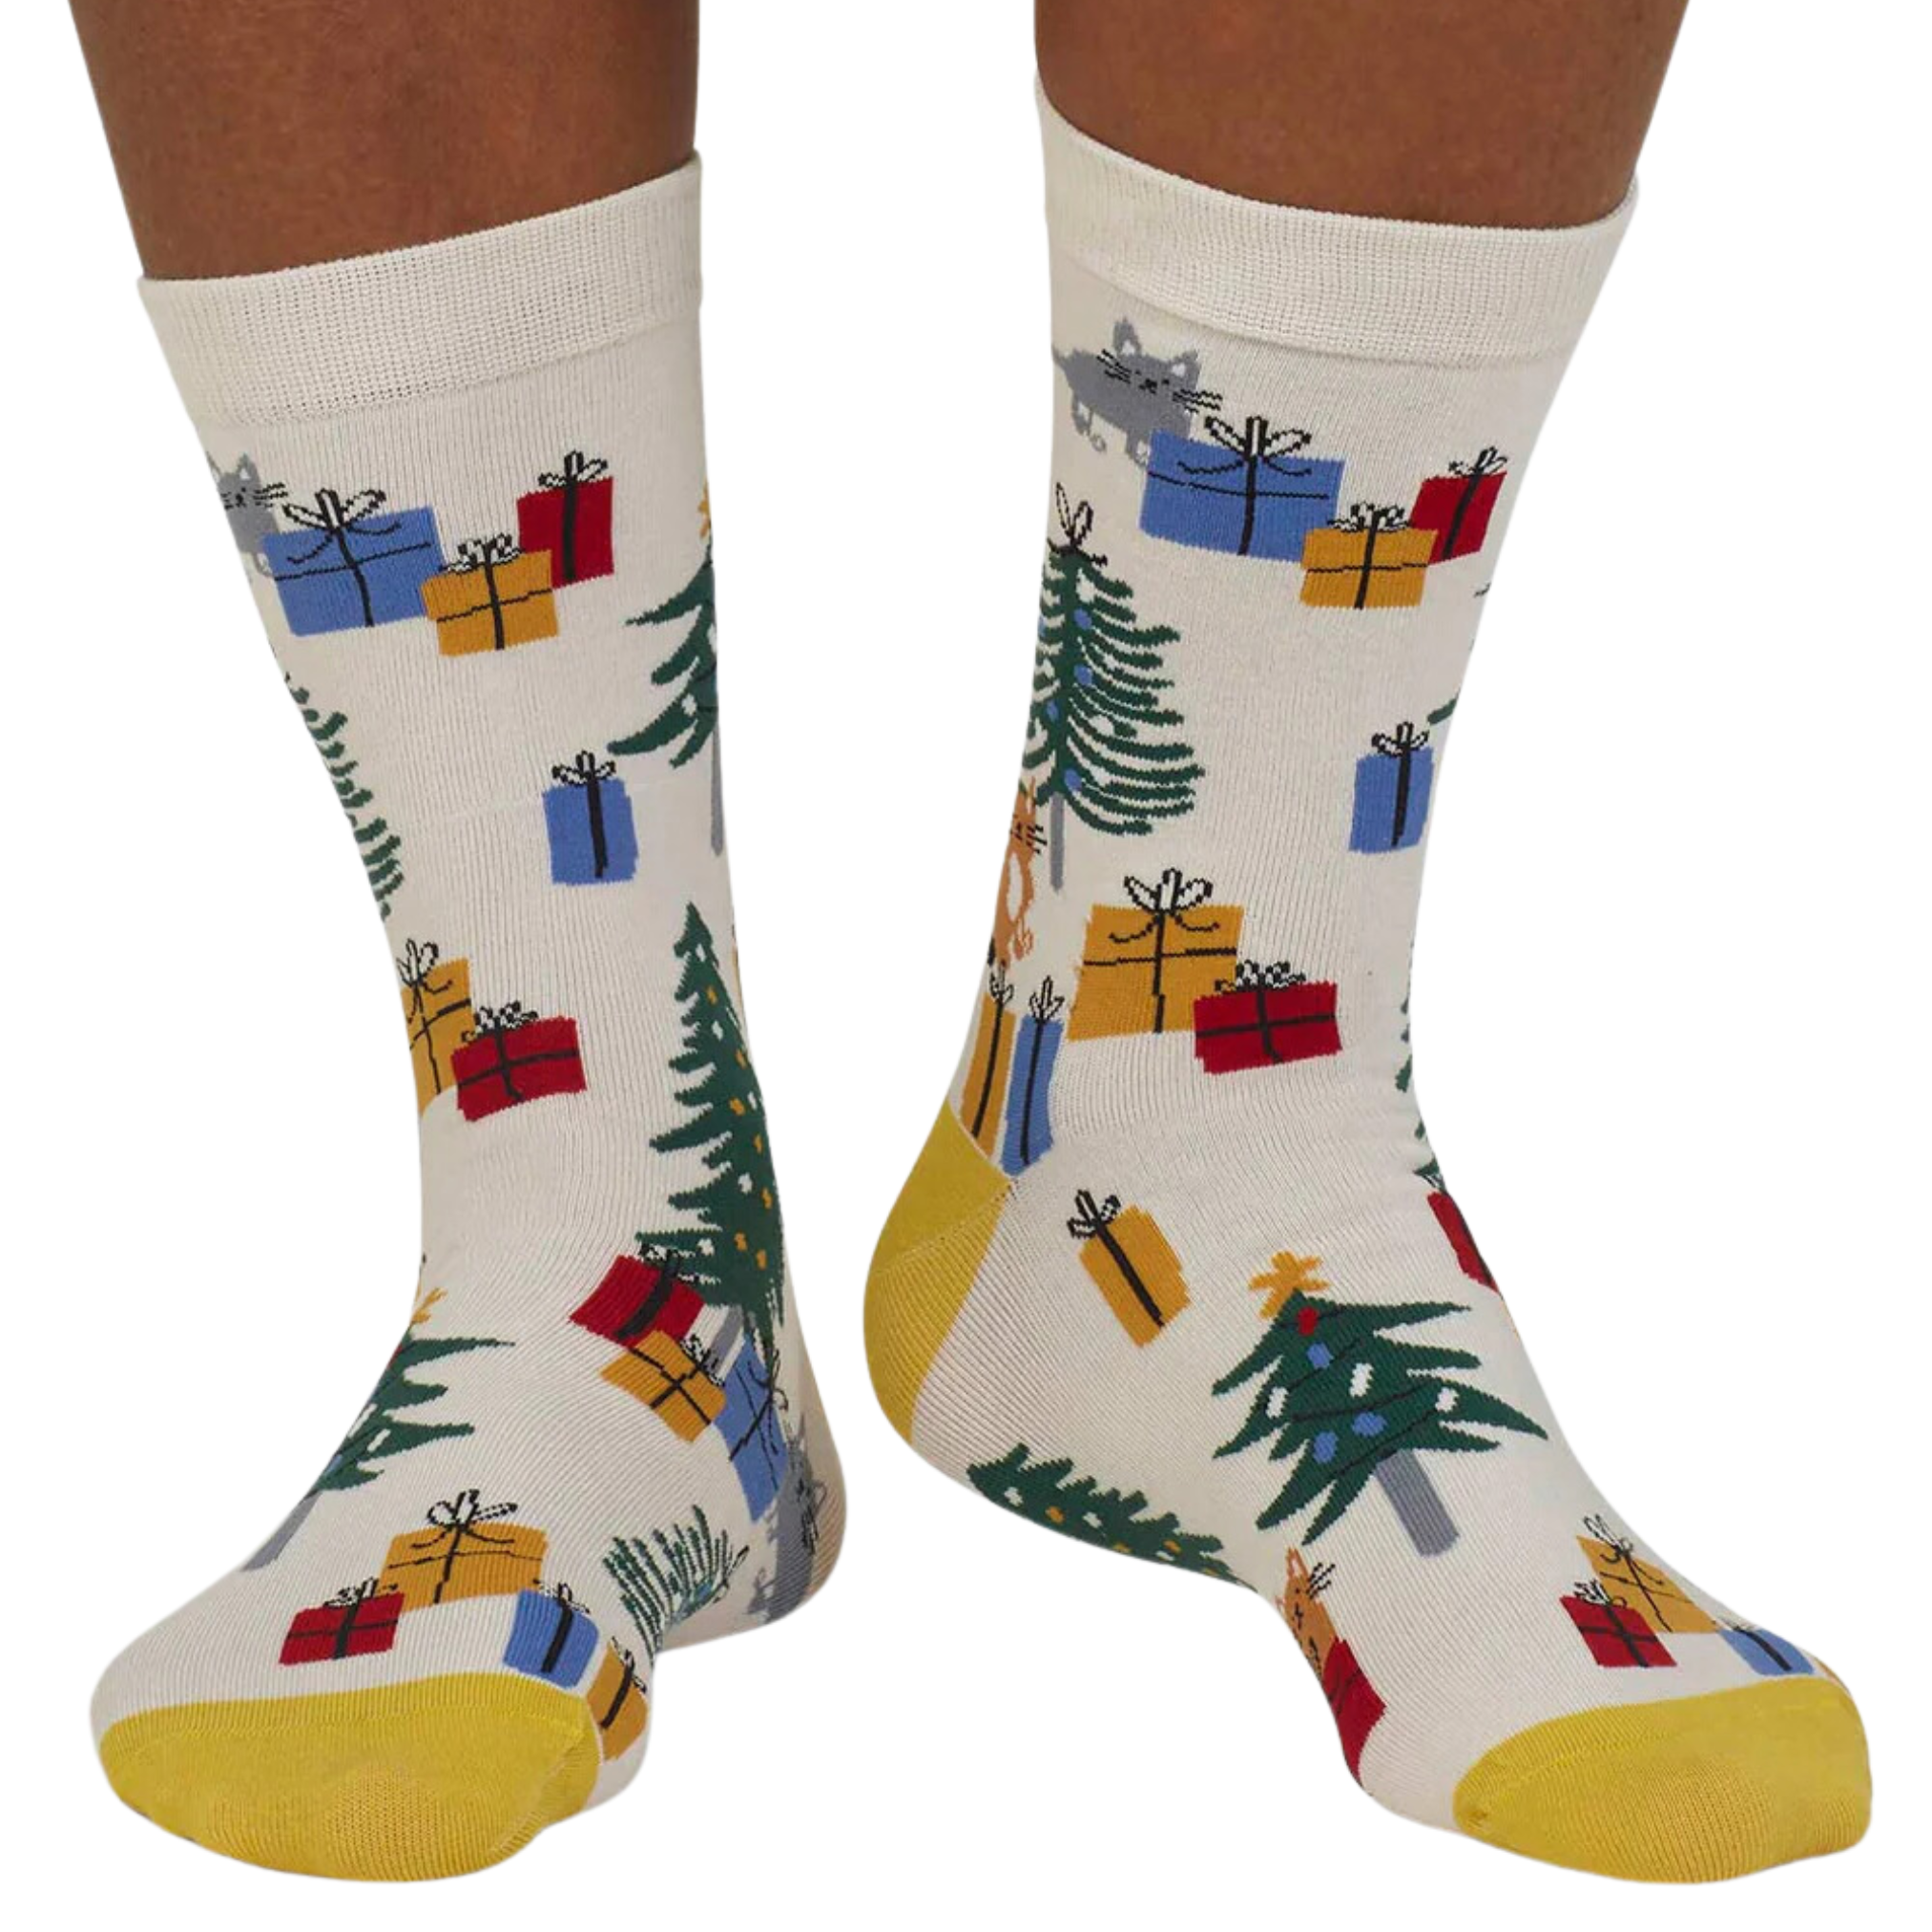 Cute Christmas Socks Over The Knee – Big Squishies